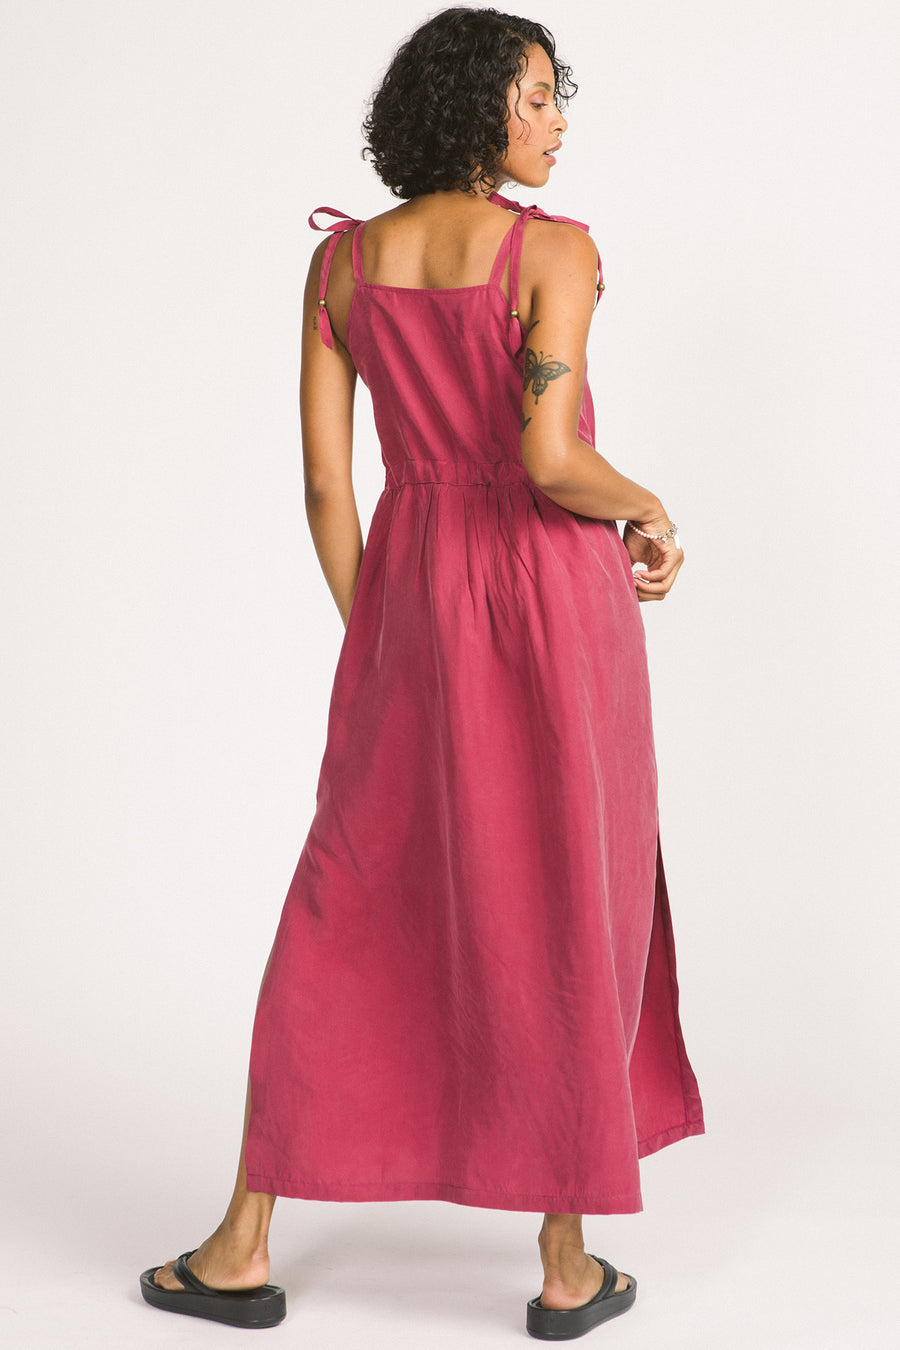 Back view of woman wearing magenta pink Novalie dress by Allison Wonderland with adjustable shoulder straps and waist. 